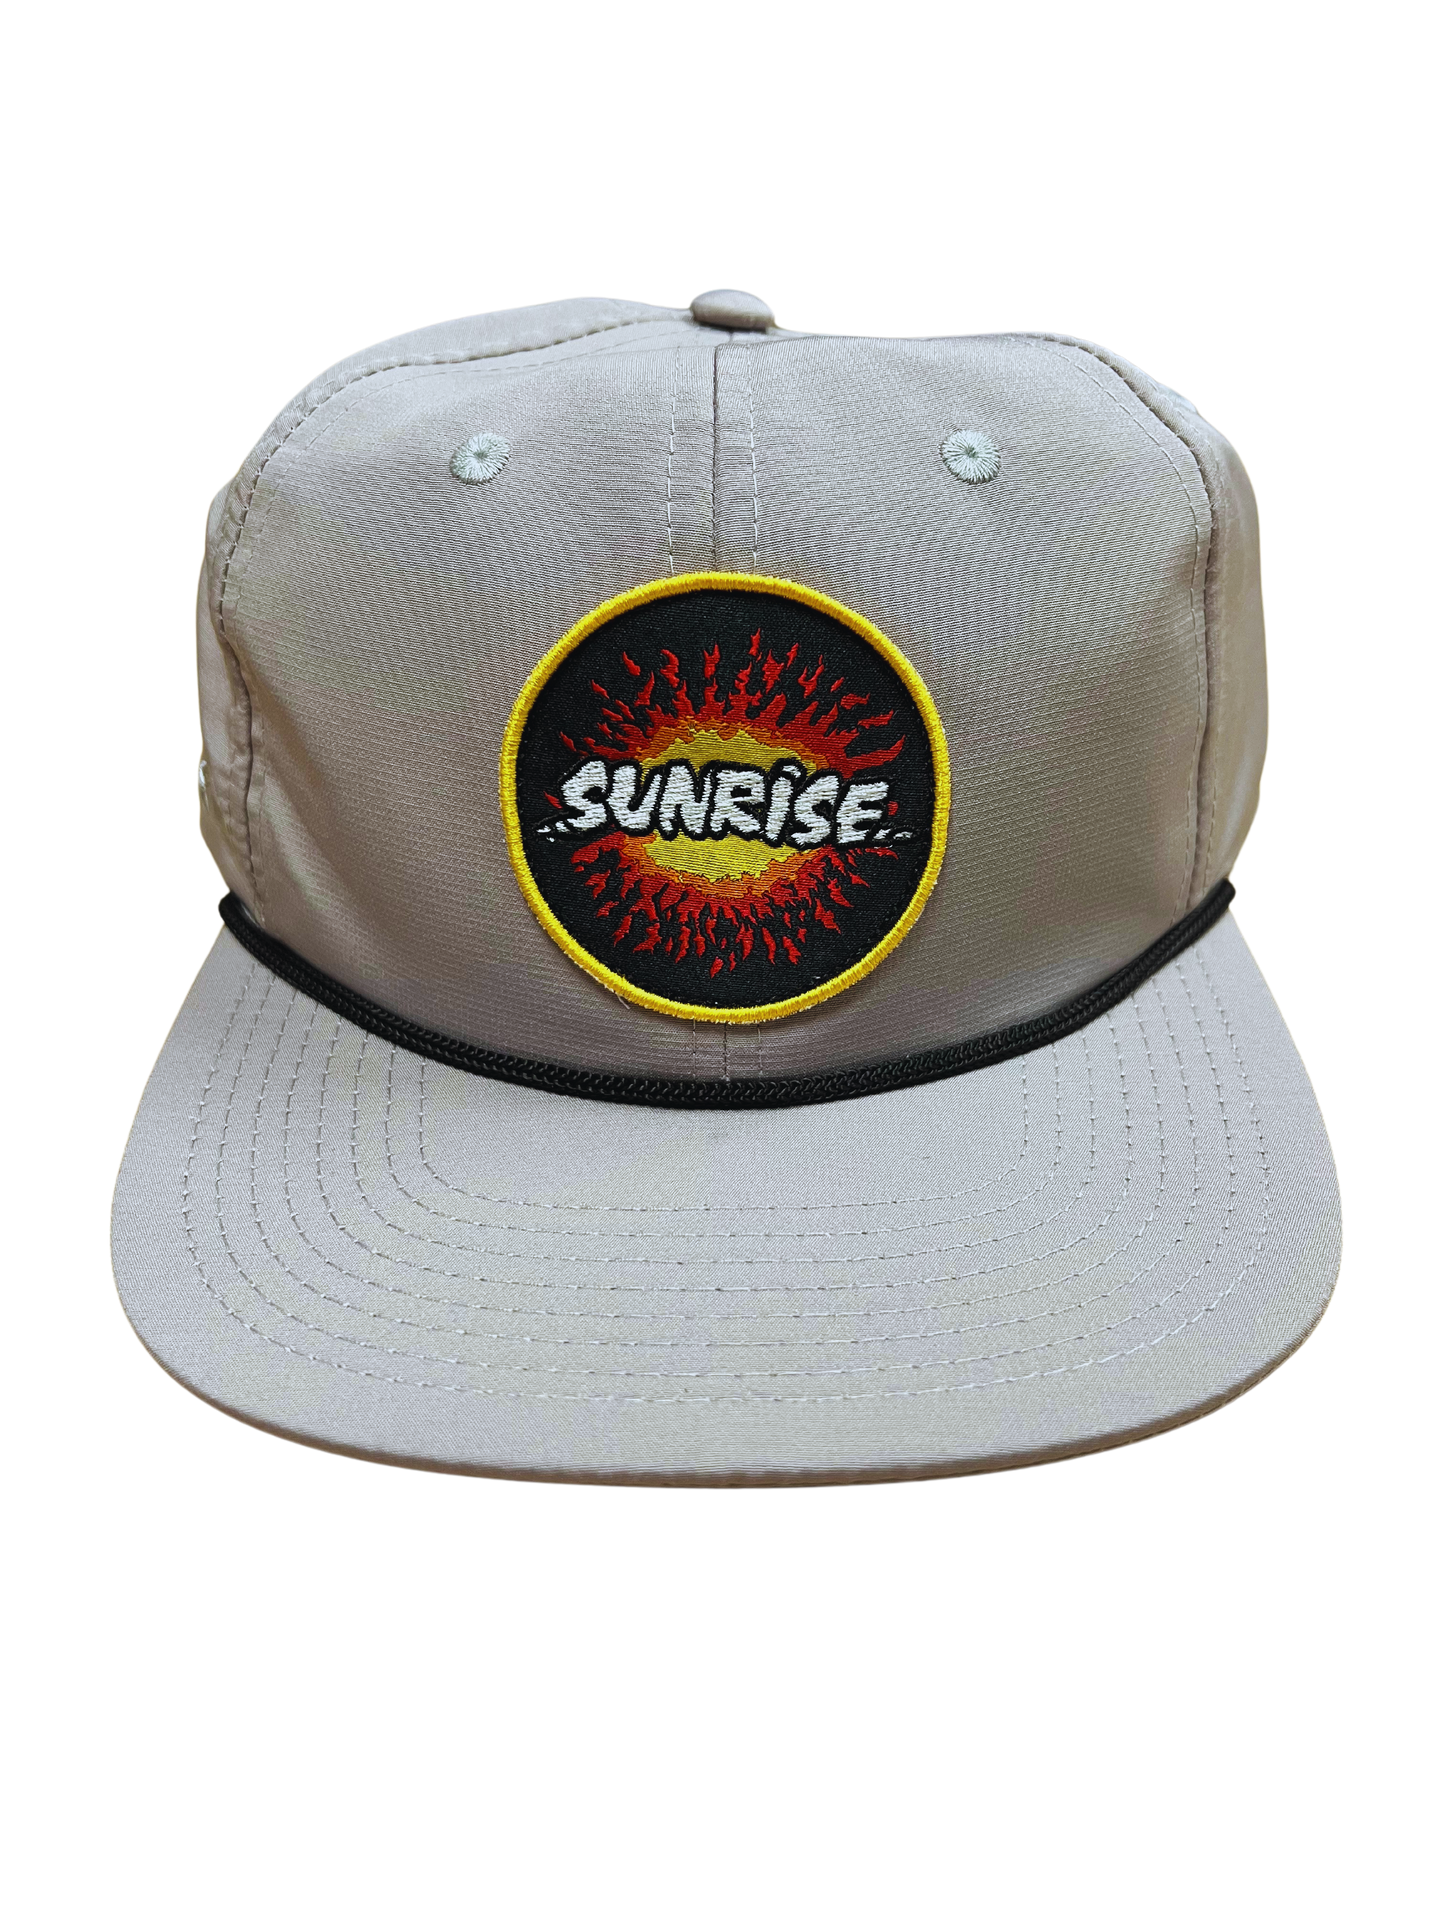 Sunrise Surf Shop Sunburst Patch Snapback Hat